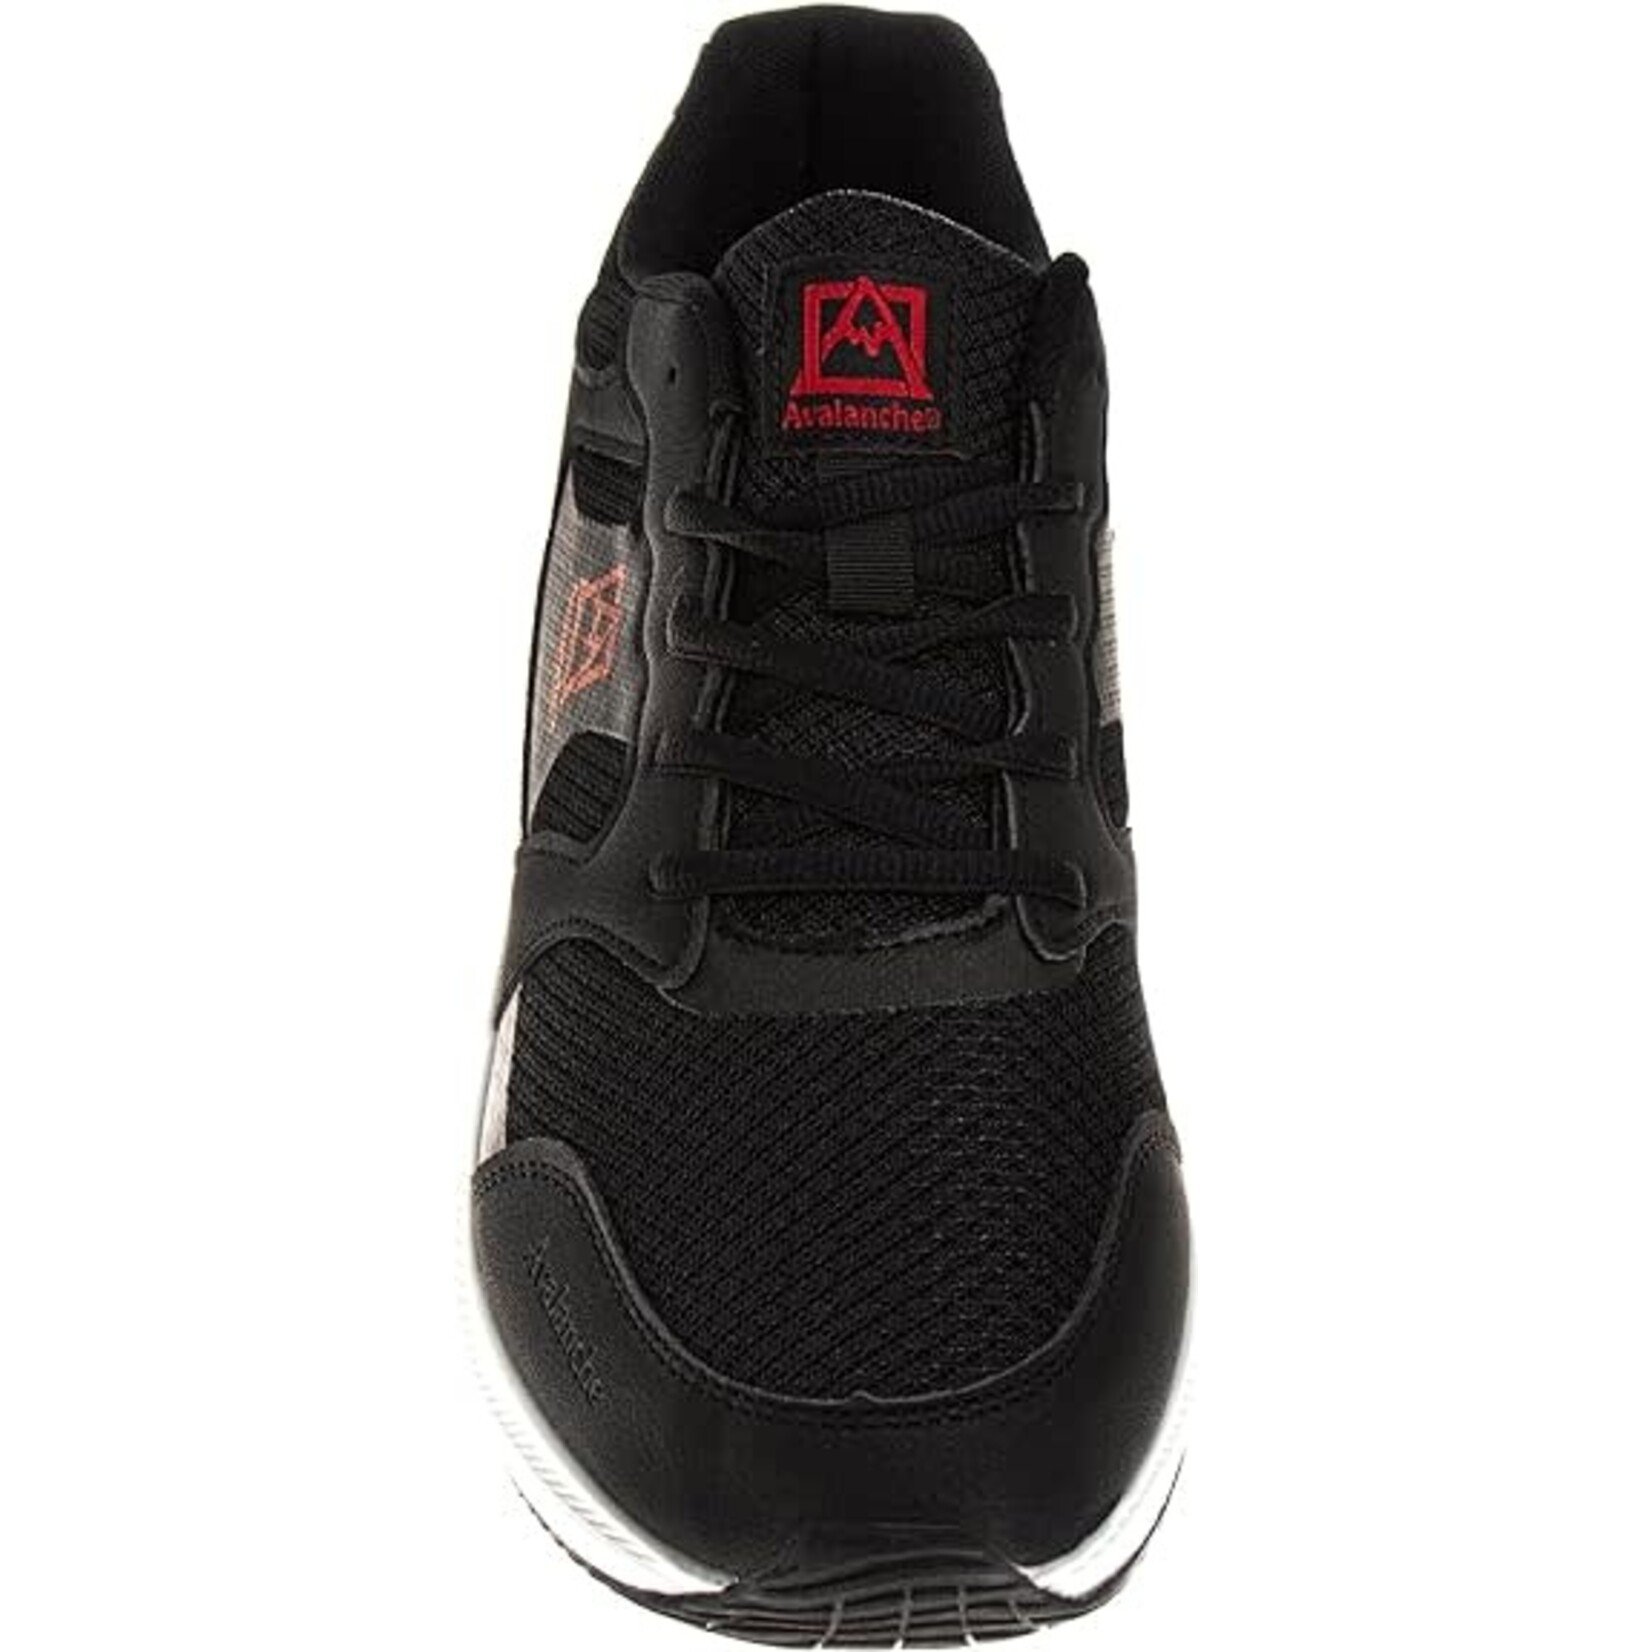 AVALANCHE Avalanche Men's Trail Sneakers Non-Slip Hiking Shoes - AV90937G